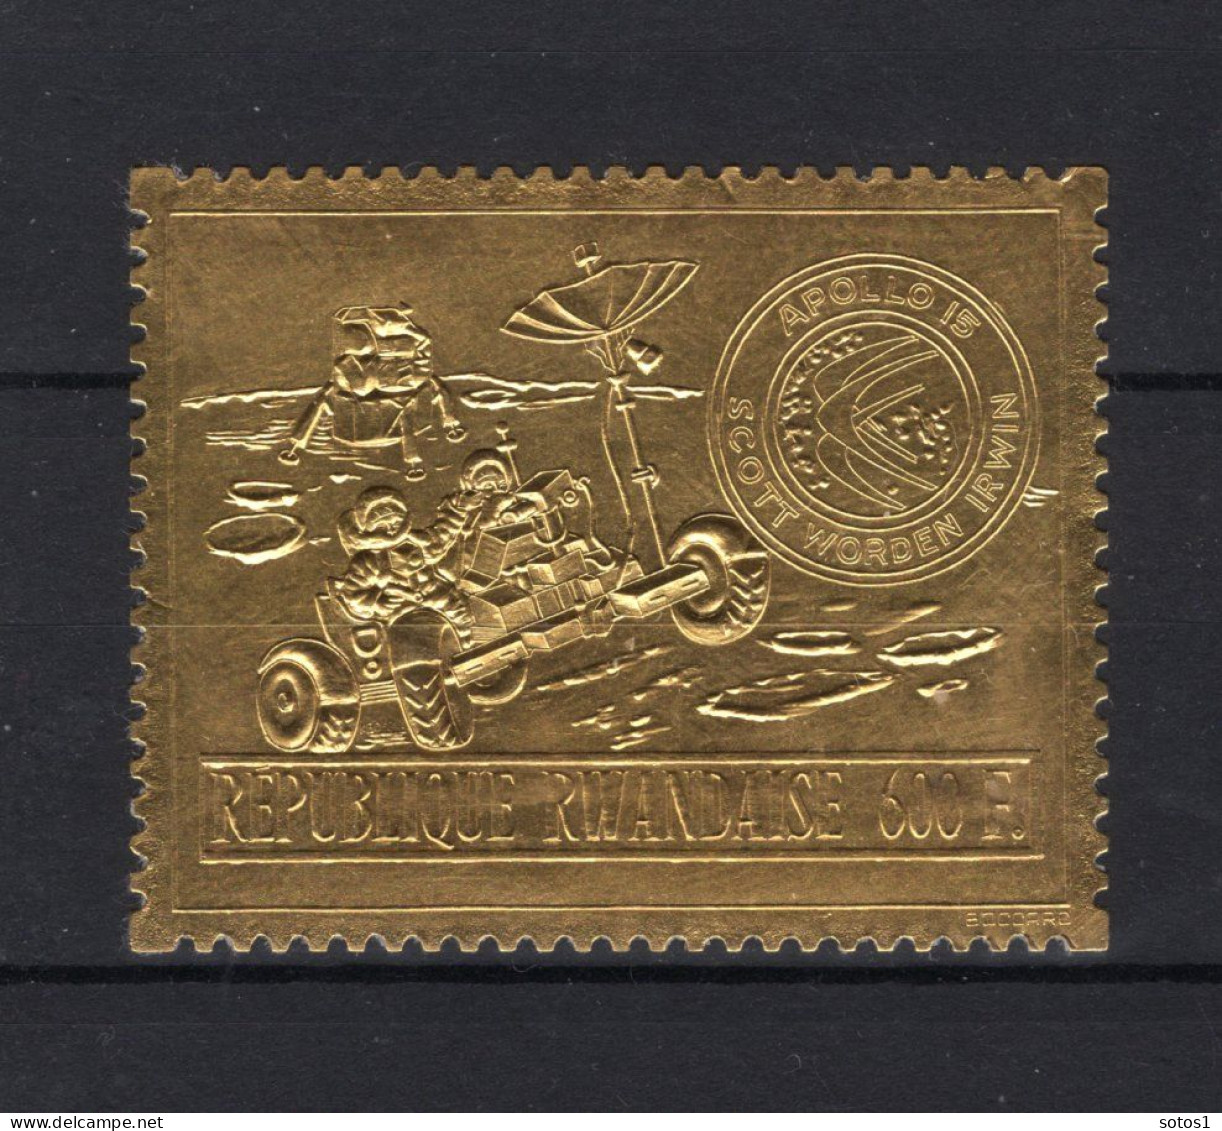 RWANDA 450A MNH 1972 - Unused Stamps